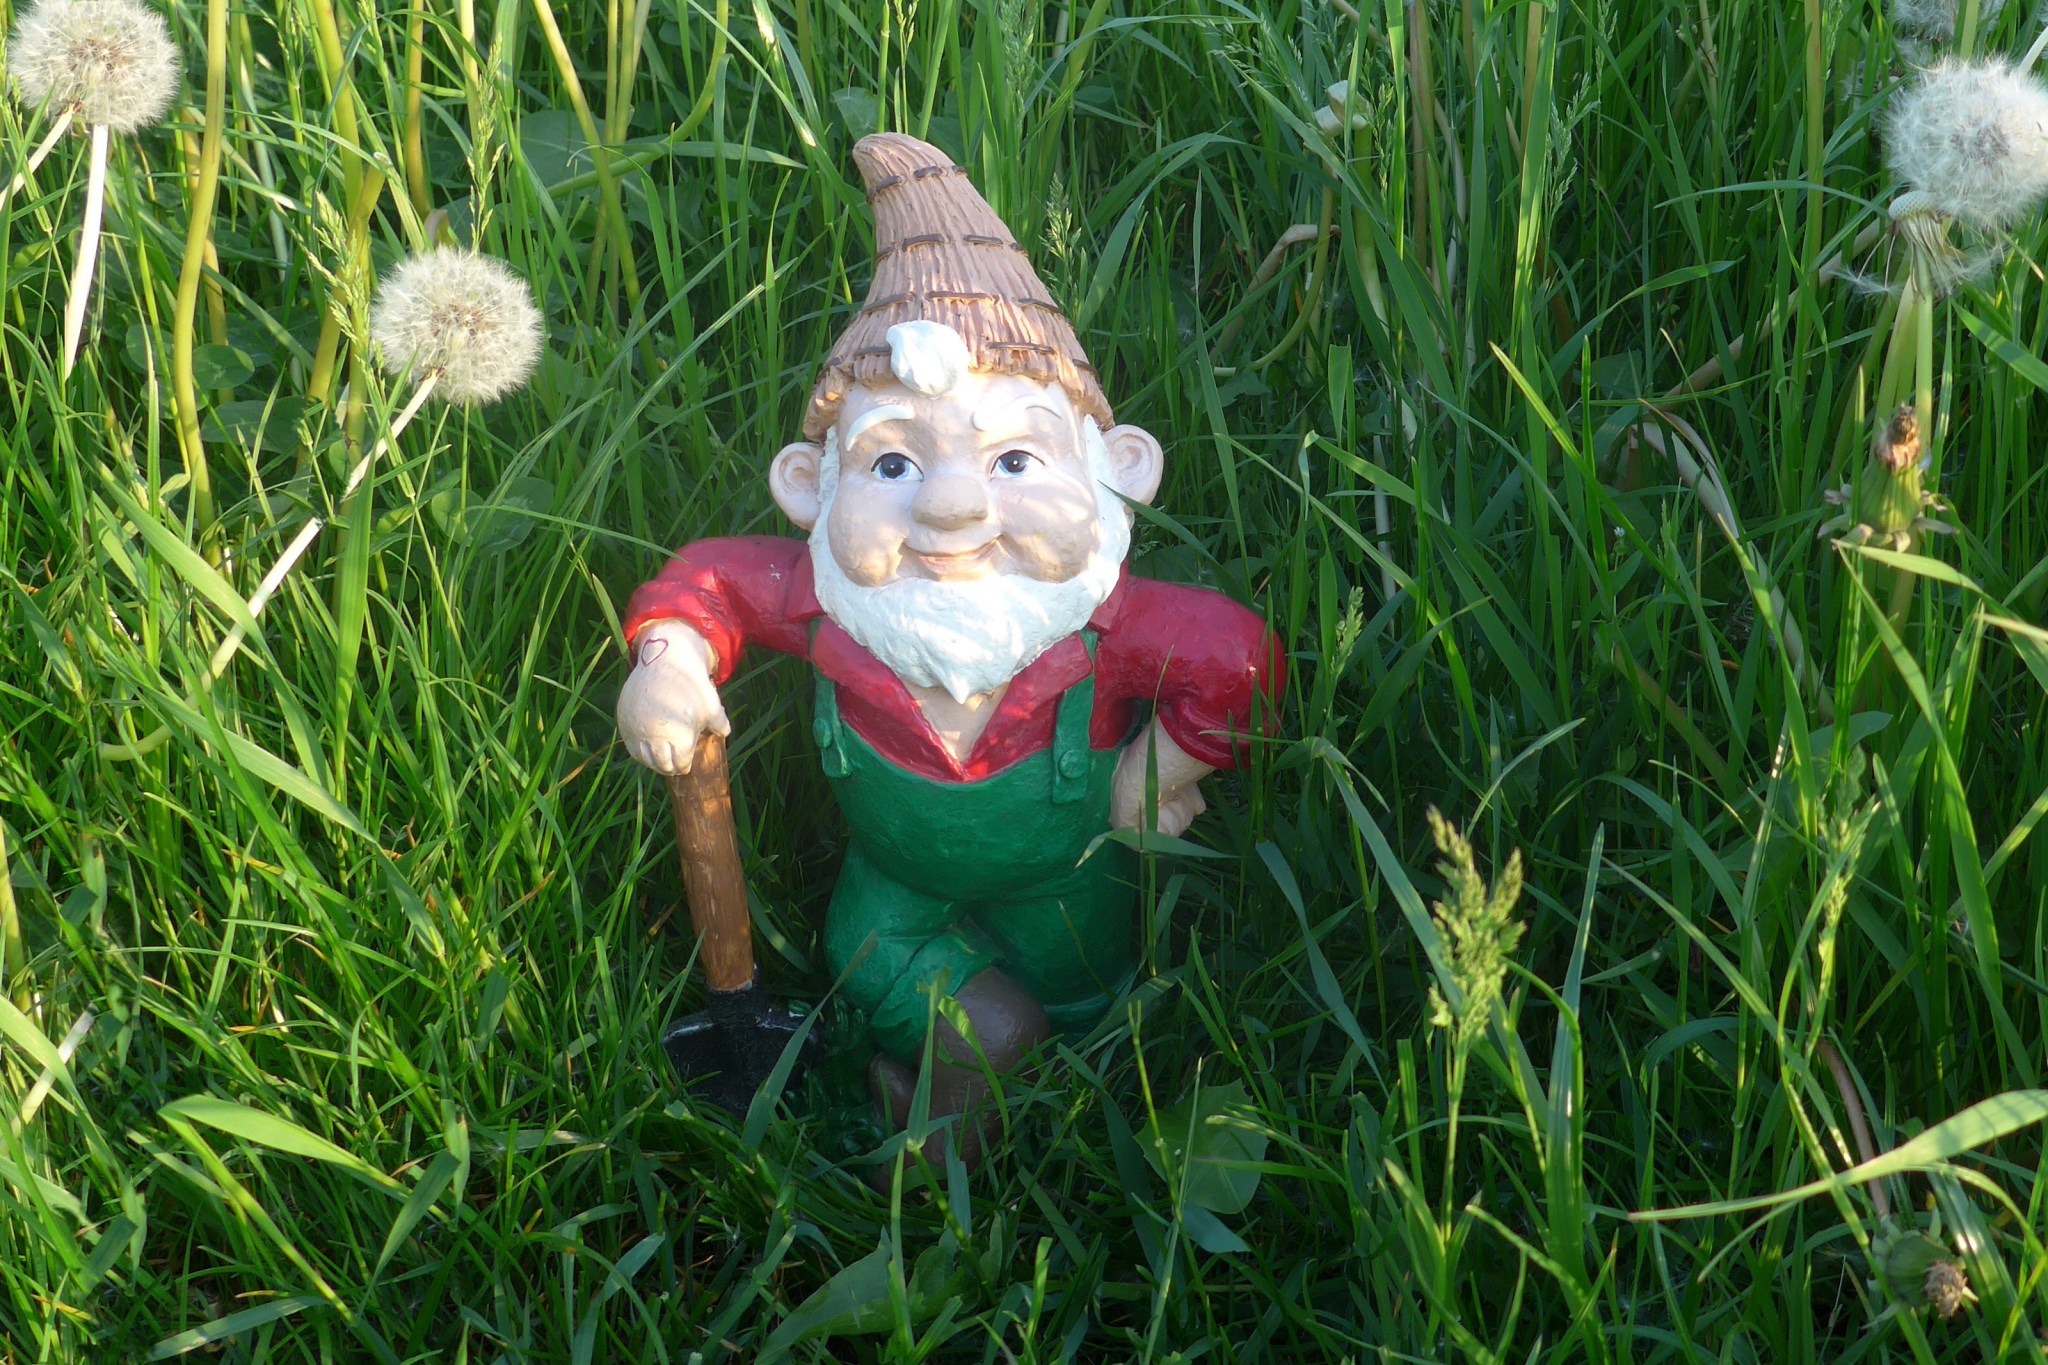 Garden gnome in tall grass